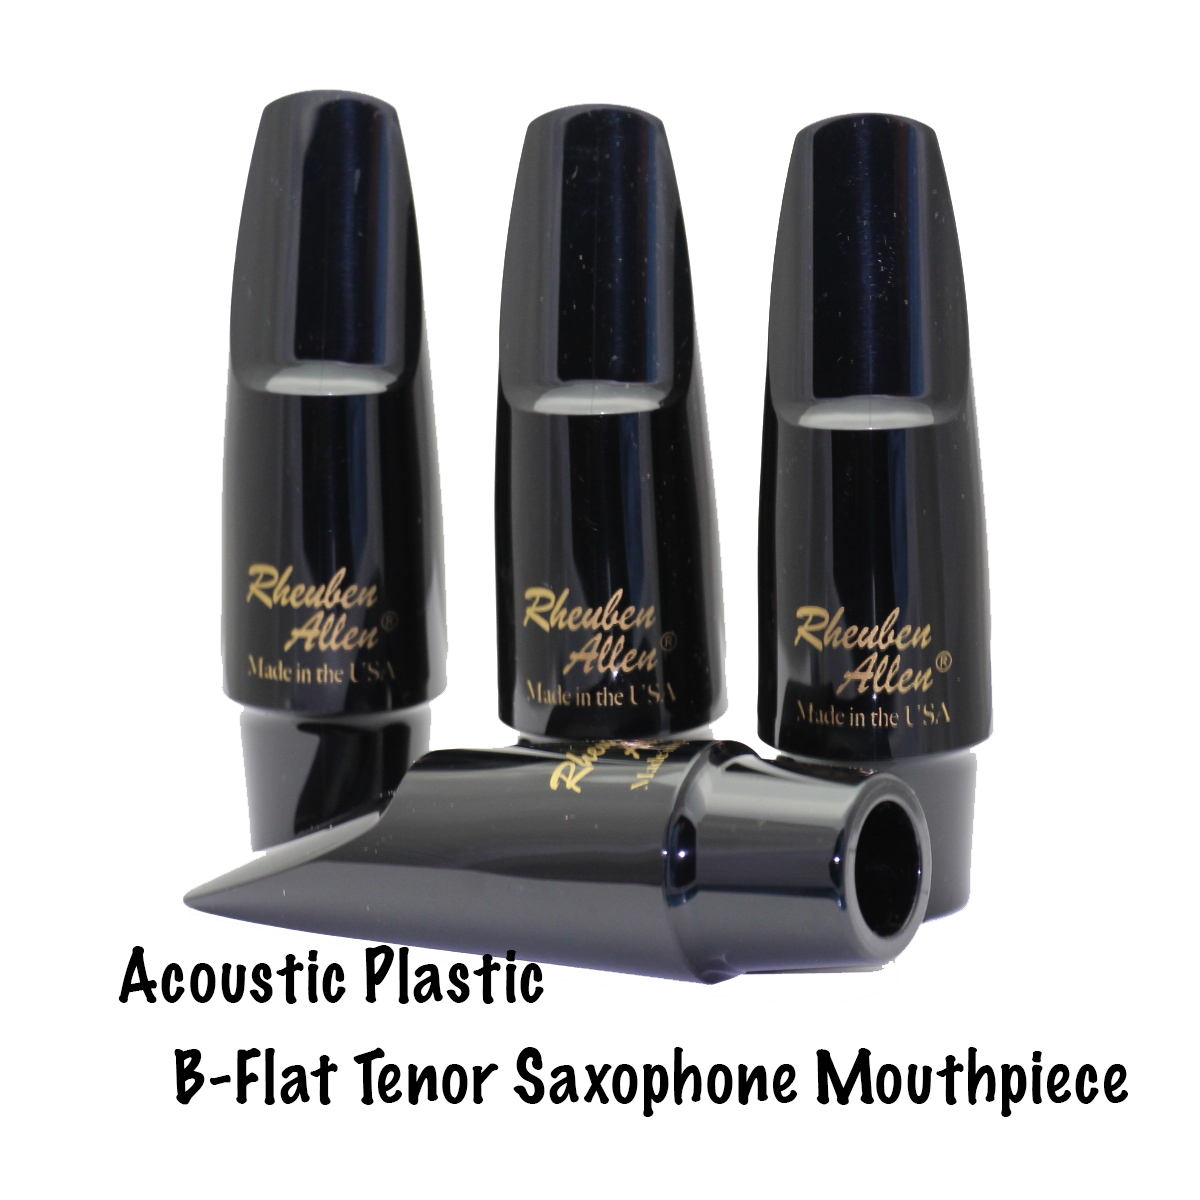 Rheuben Allen Acoustic Plastic B-Flat Tenor Saxophone Mouthpiece